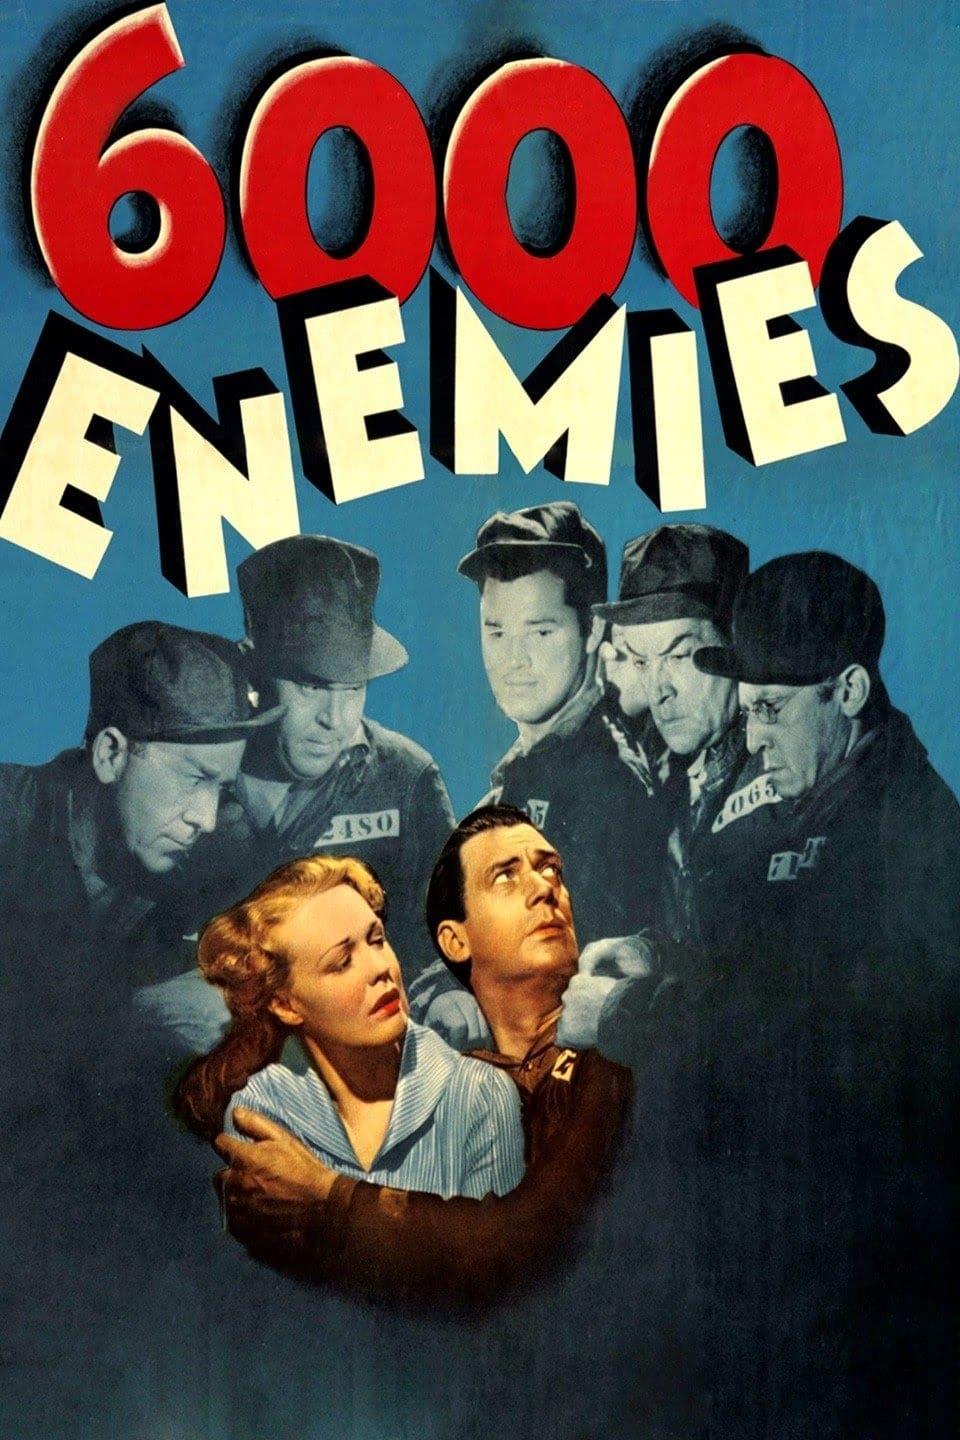 6,000 Enemies poster